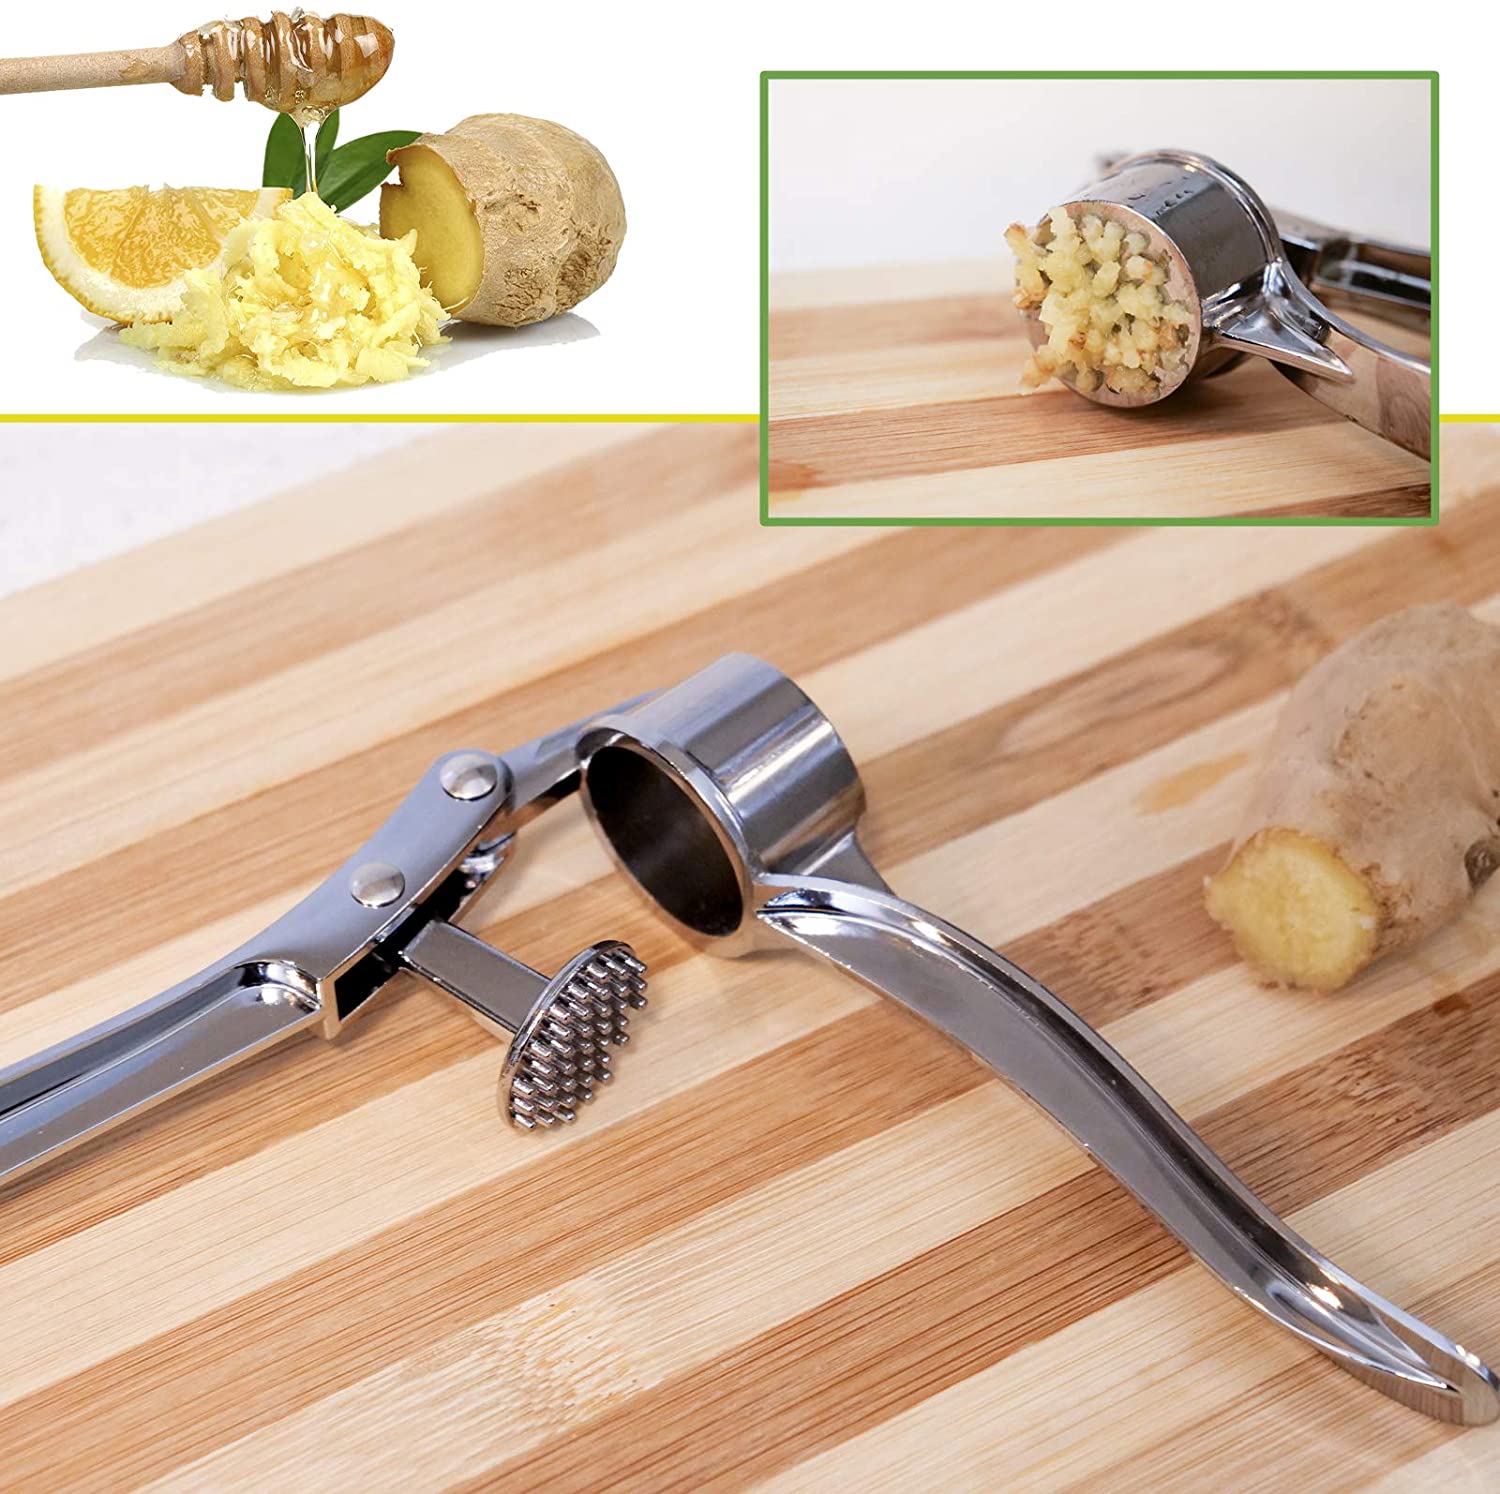 Stainless Steel Garlic Press - Professional Kitchen Garlic Crusher